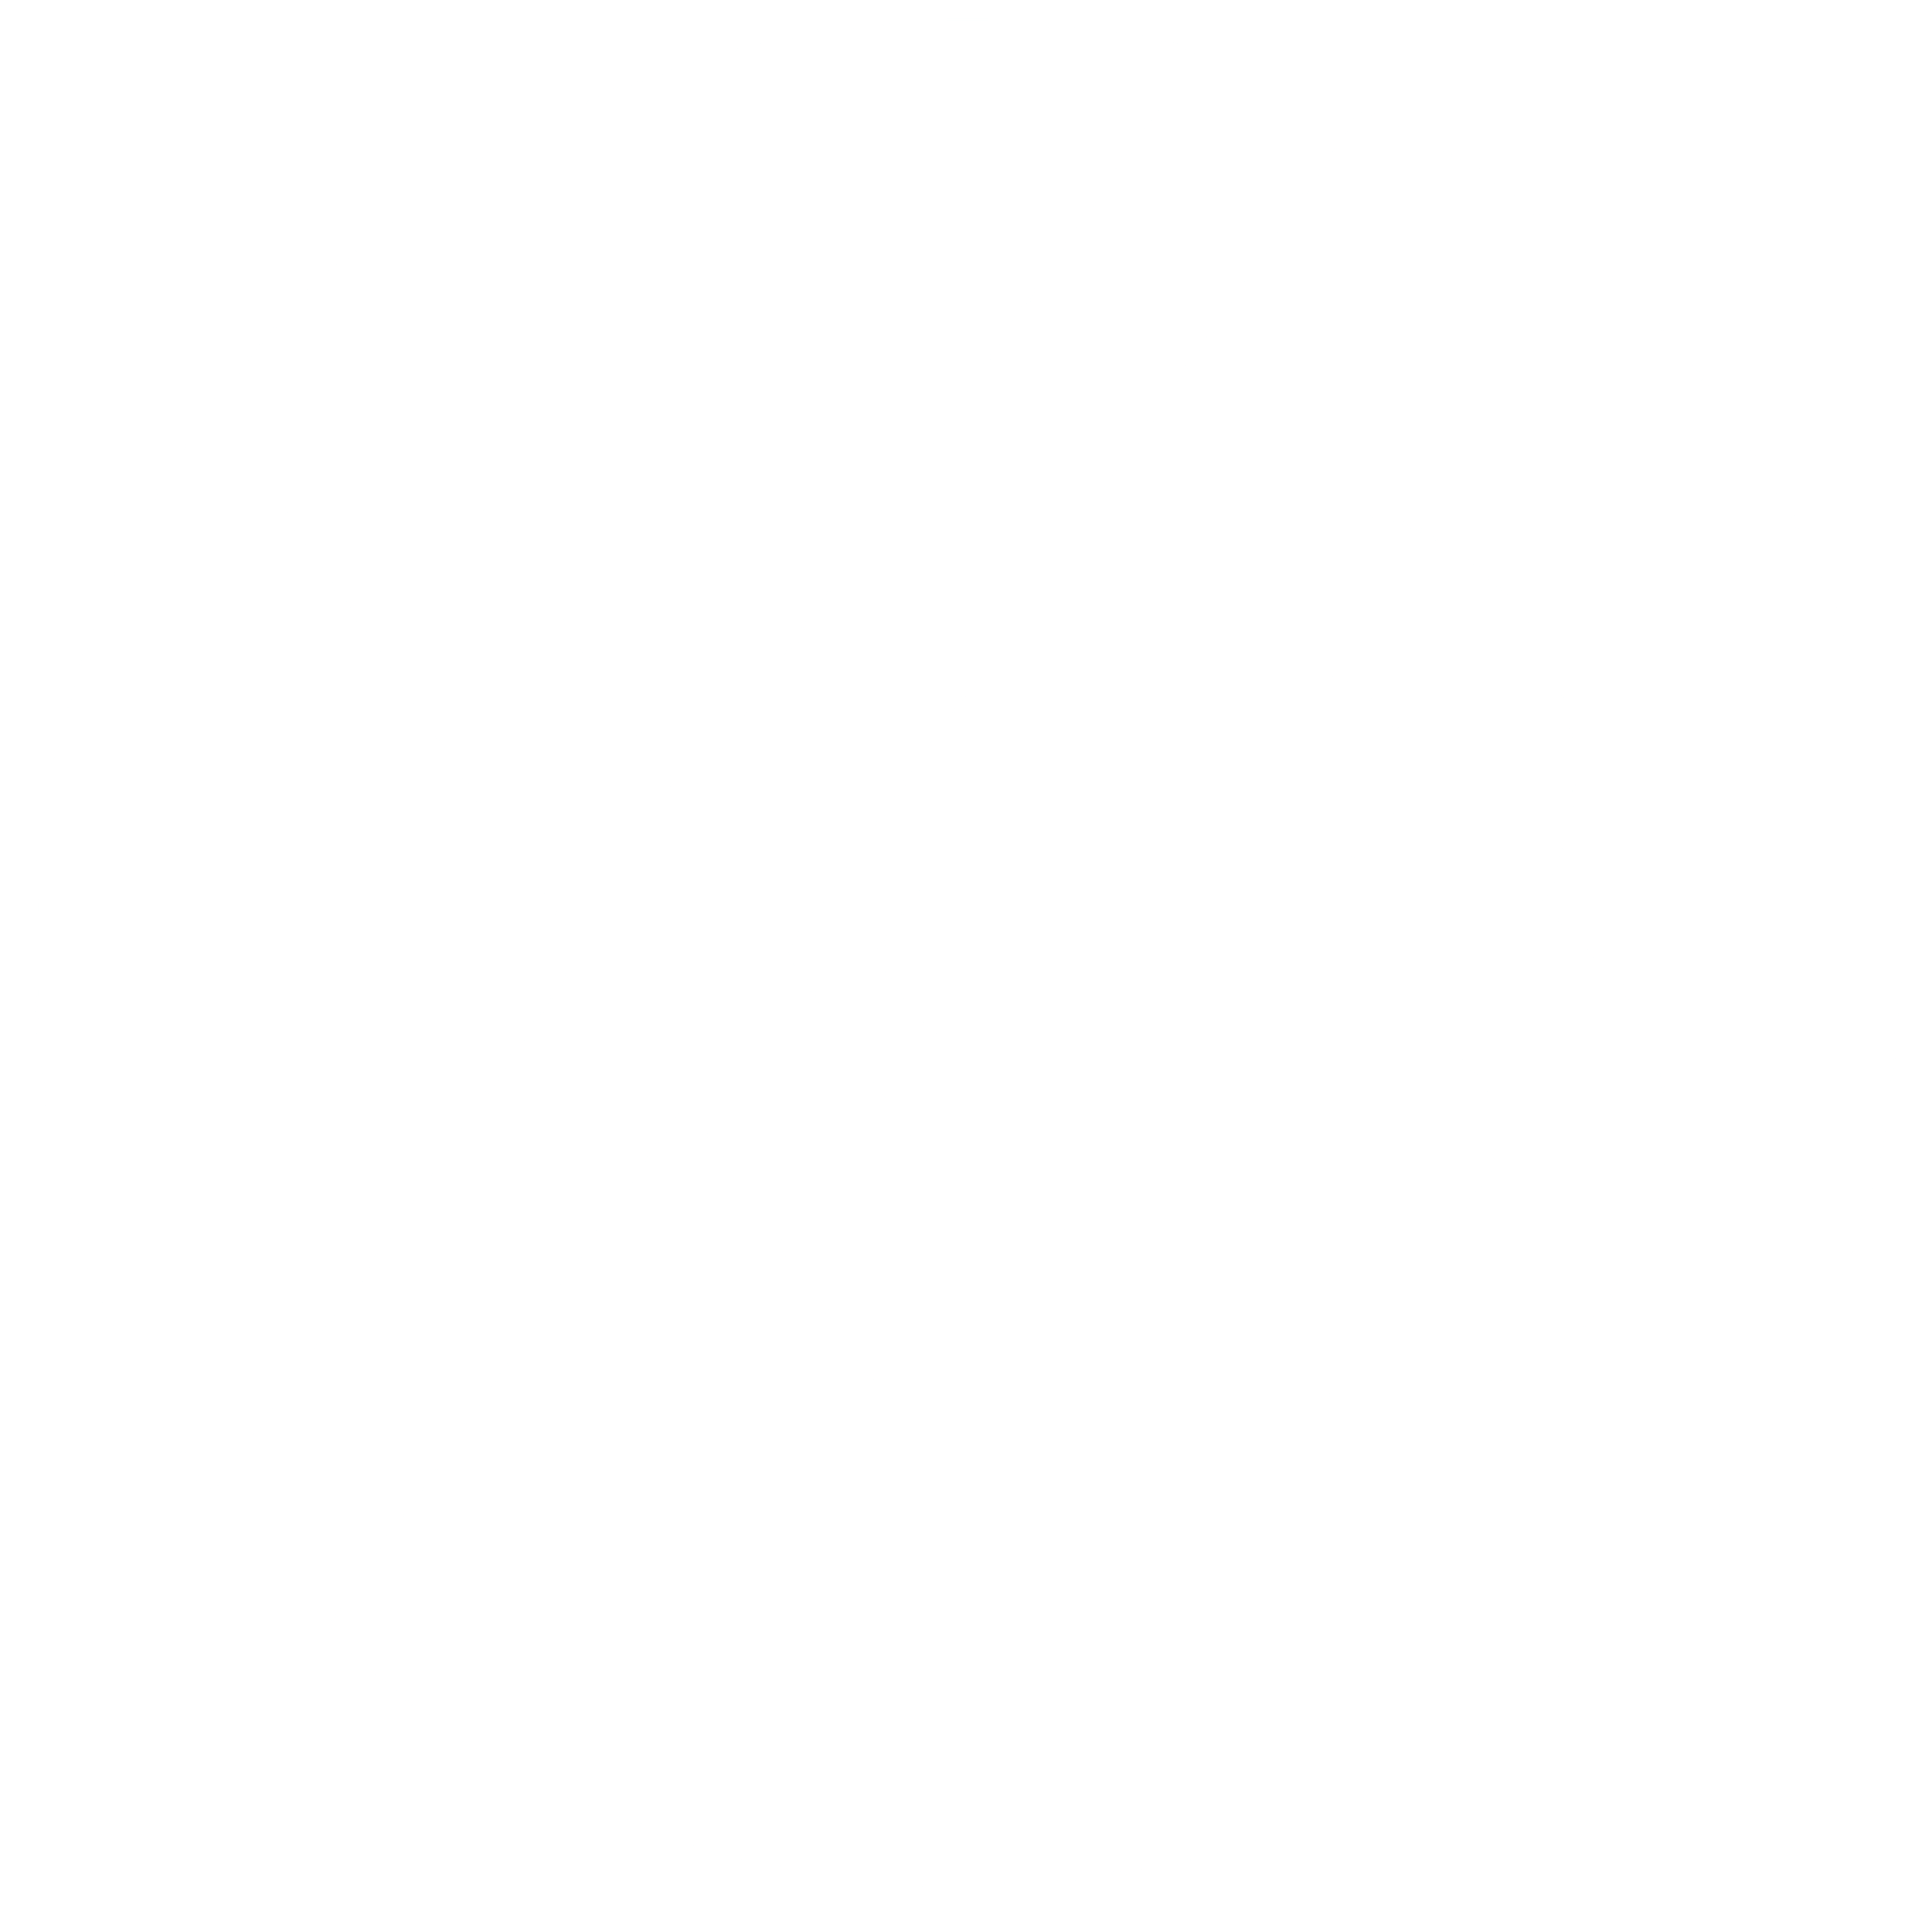 XBANKING Logo